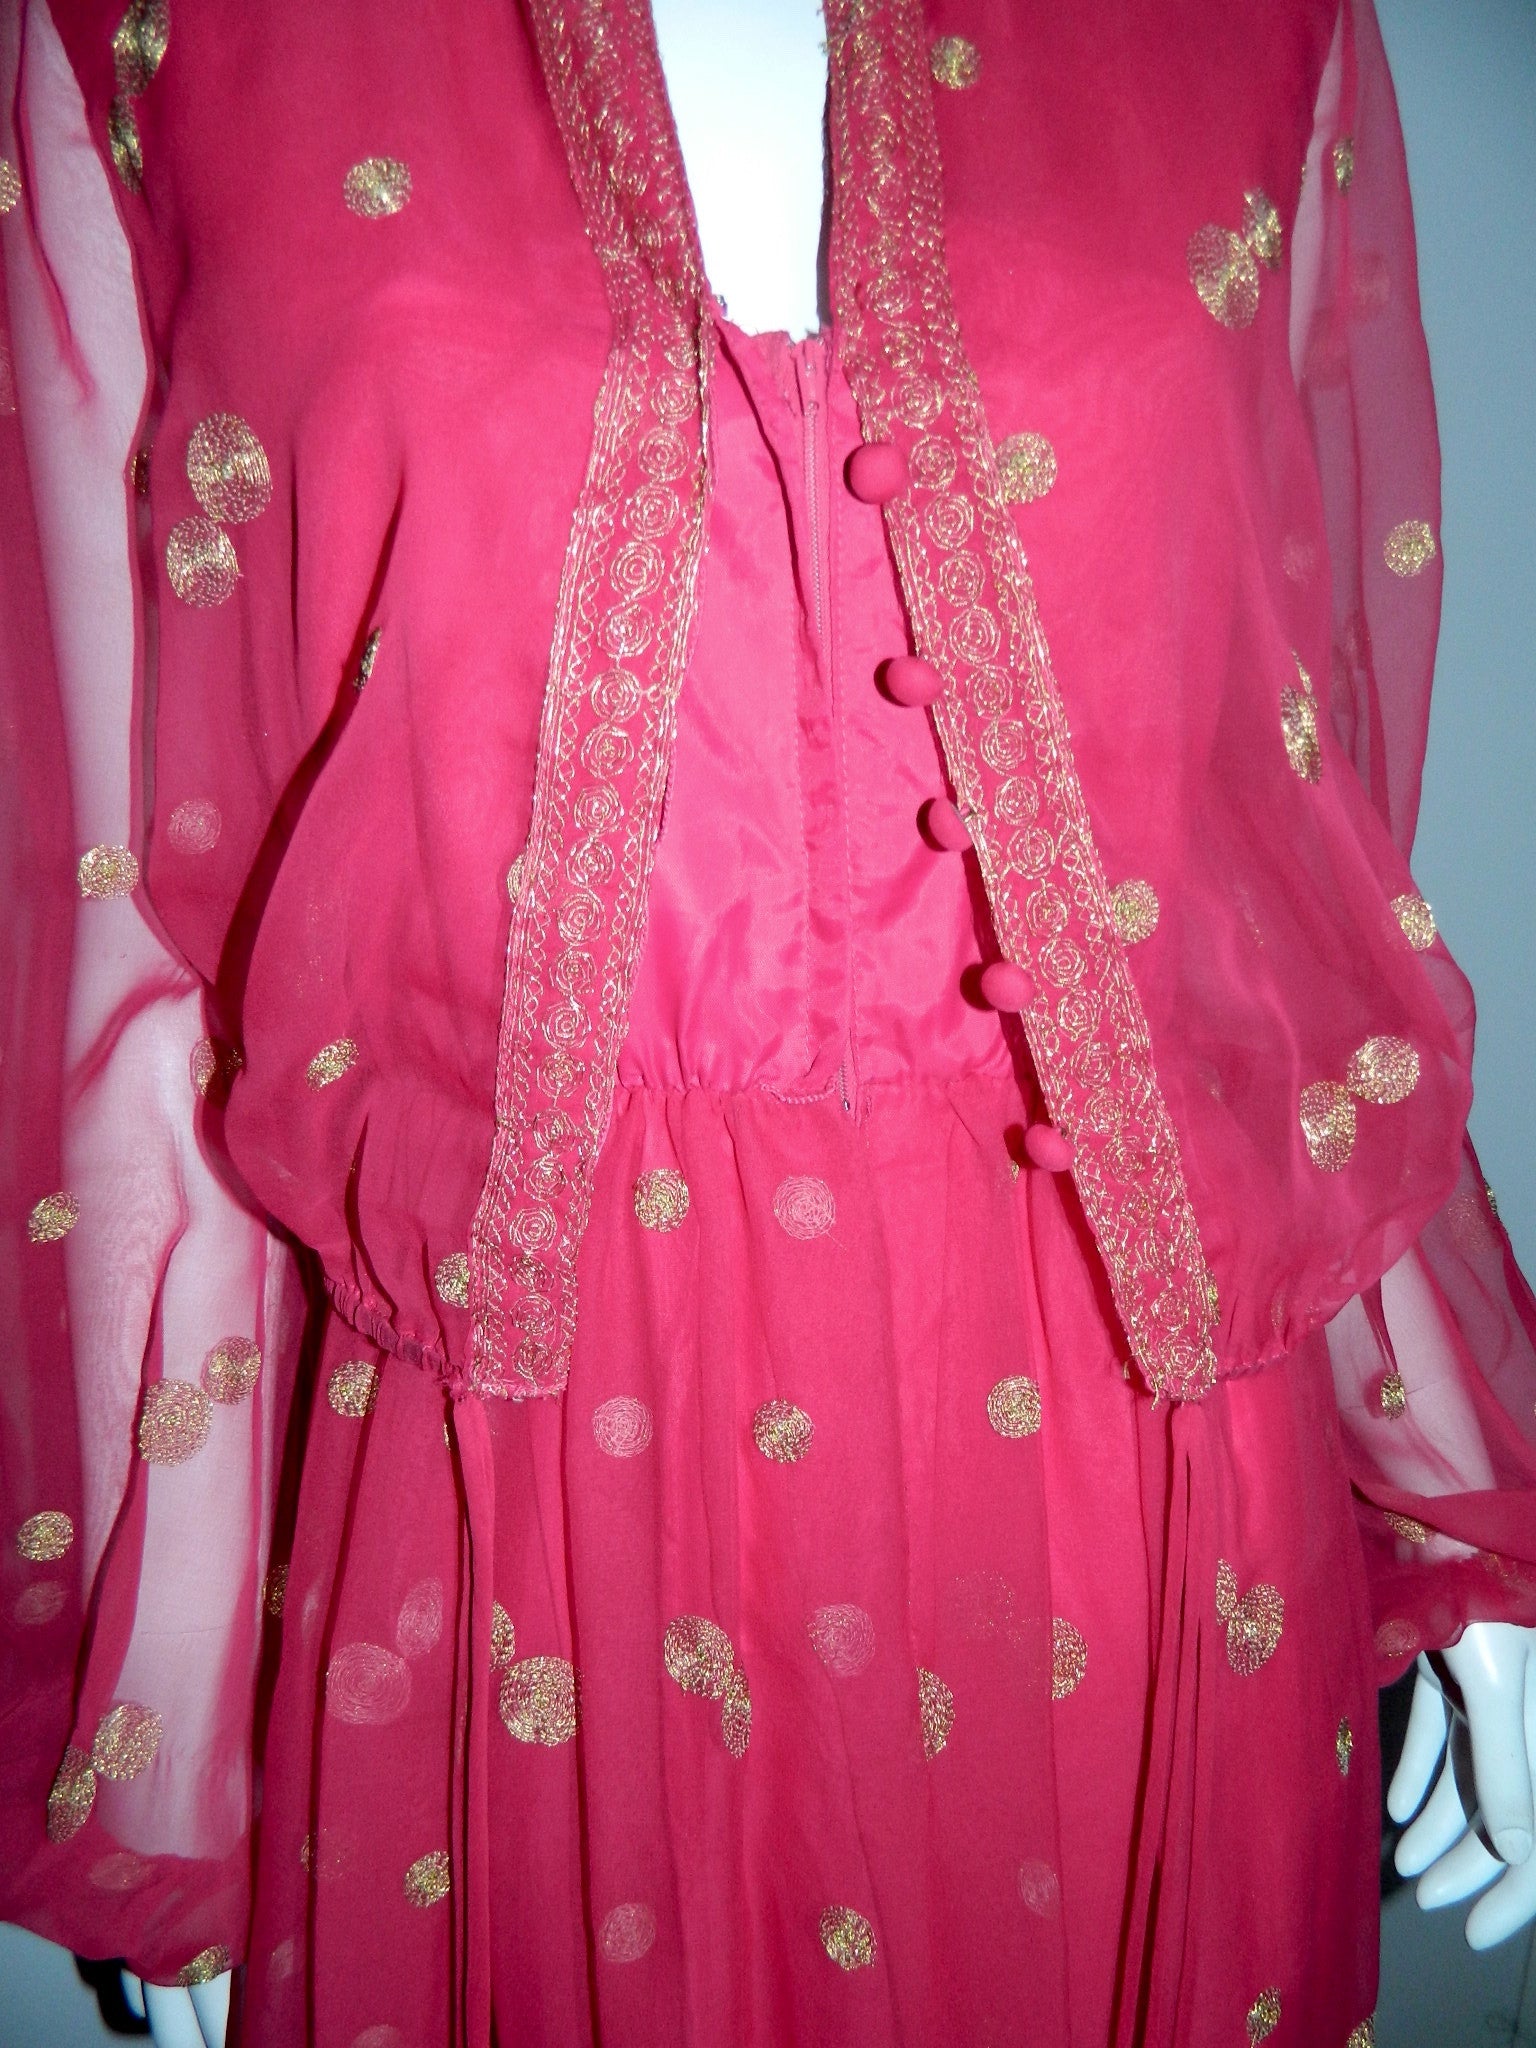 vintage 1970s Boho gown / magenta chiffon Jack Bryan maxi dress / gold embroidery XS - S